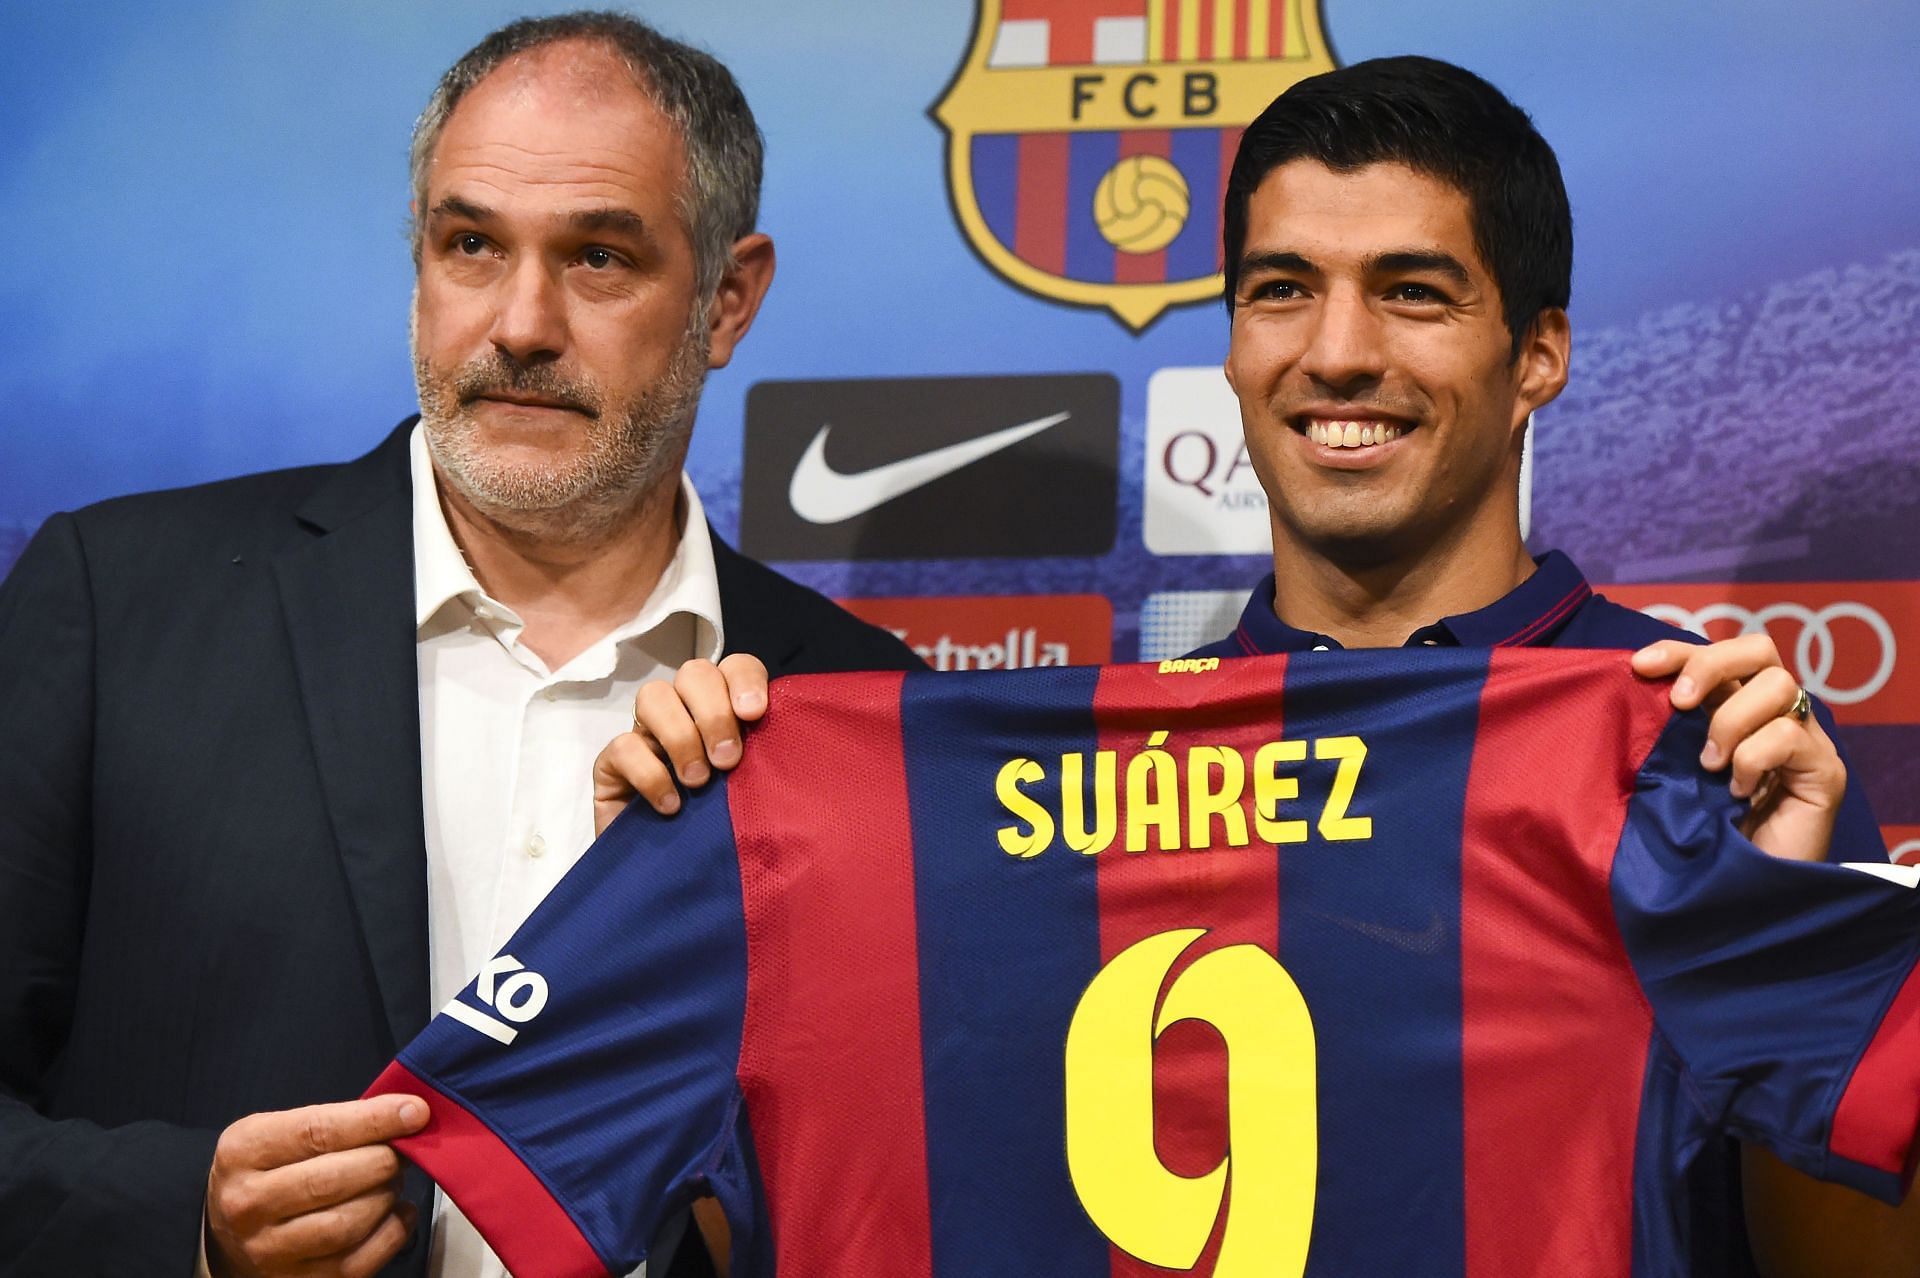 Zubizarreta unveiling Luis Suarez at Barcelona